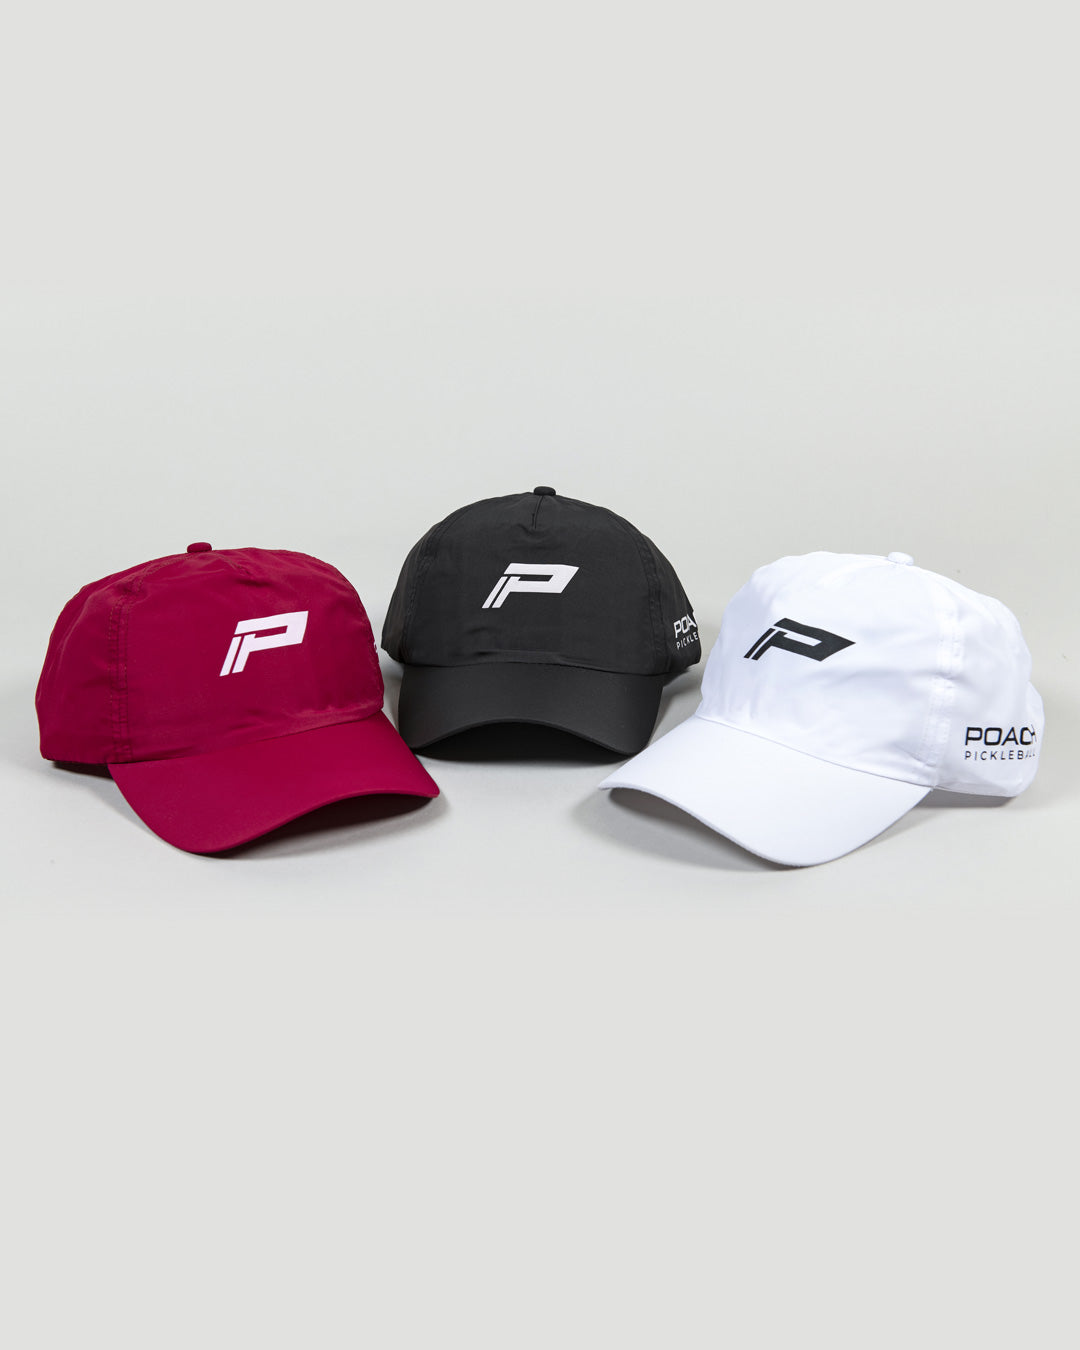 Poach Dri-fit Hat – “P” Logo